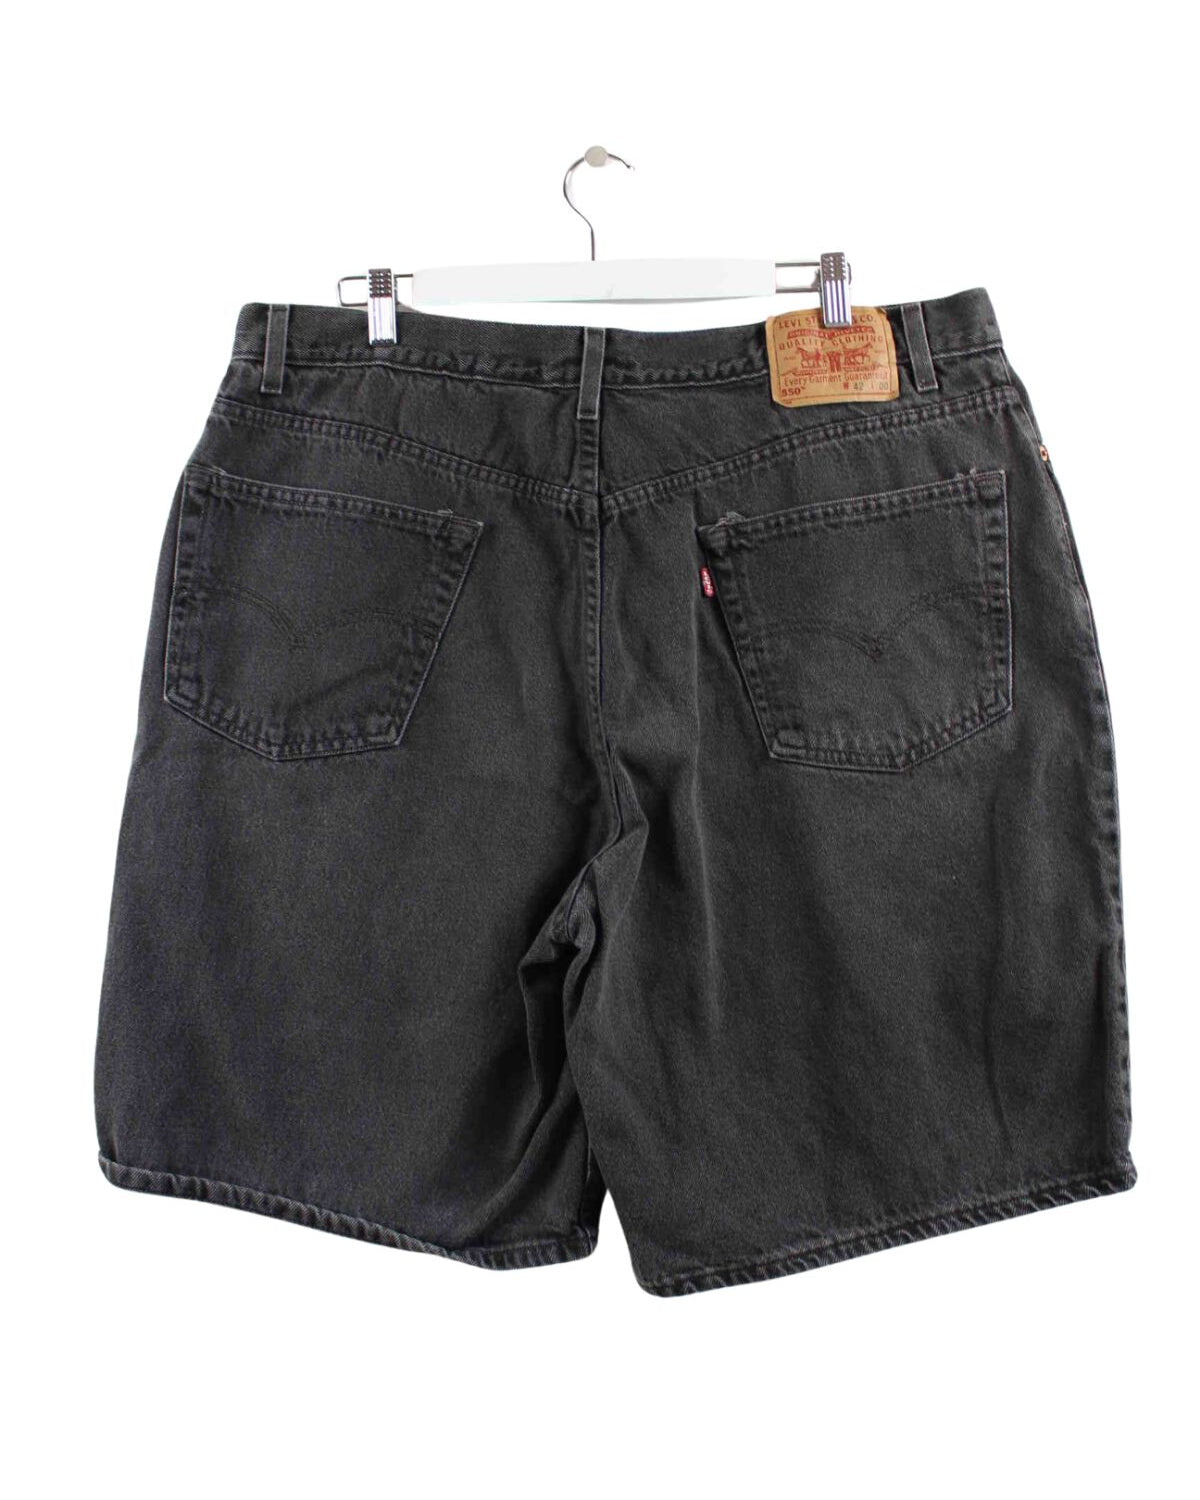 Levi's 550 Shorts Grau W42 (back image)